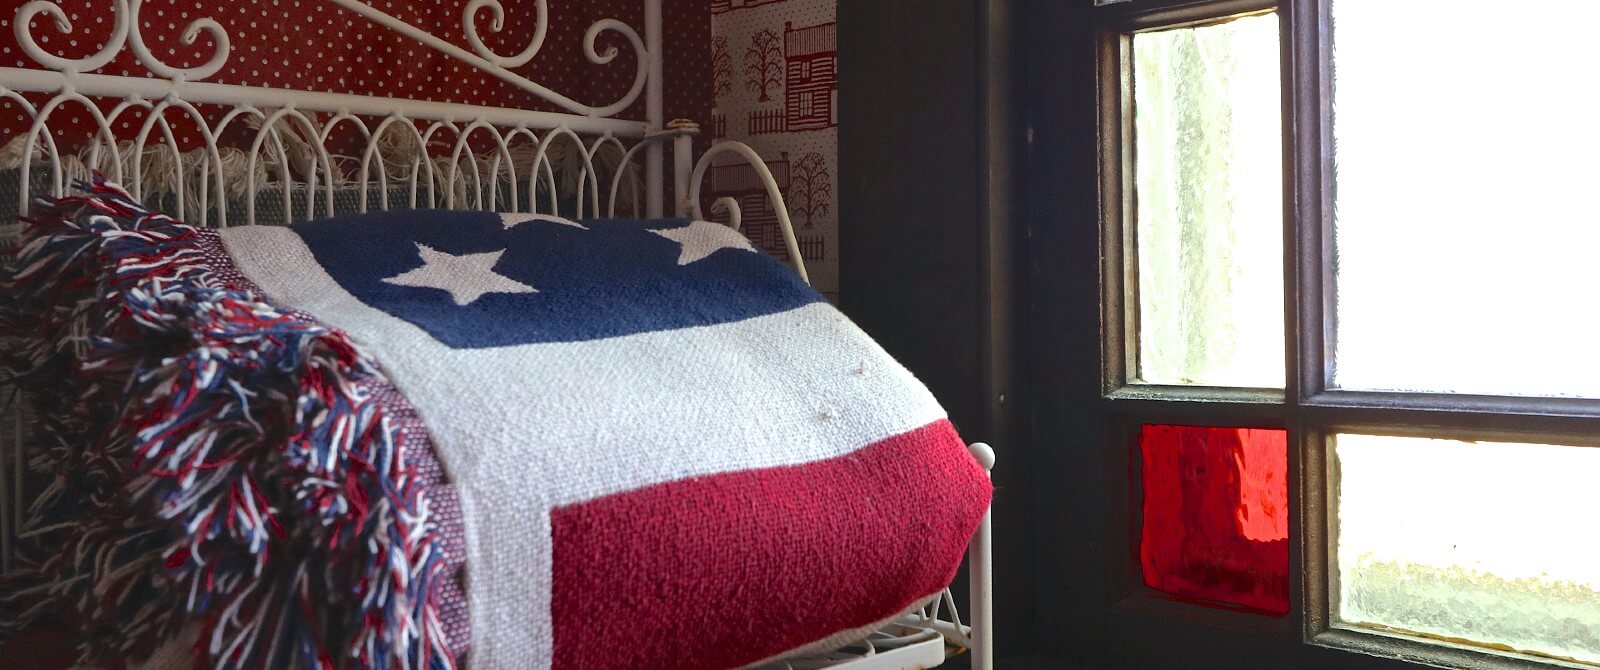 American flag blanket sitting on a white iron shelf next to a window